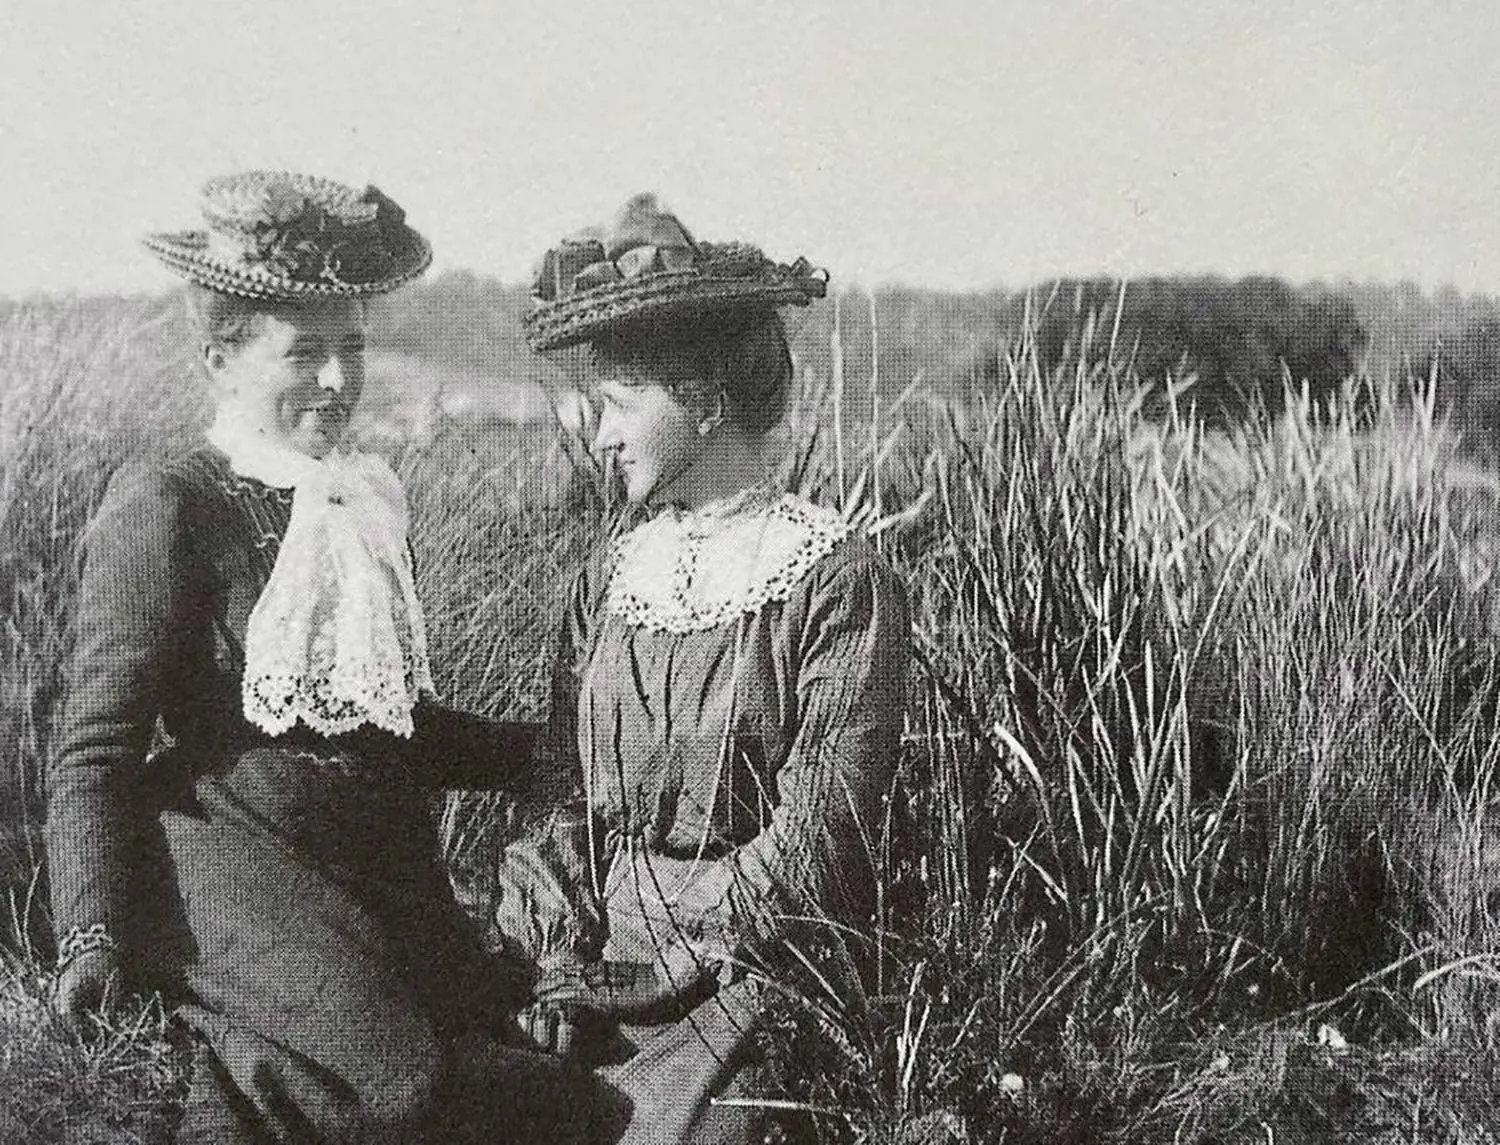 Sylvia Mills and Marie Bjelke-Petersen stand in Tasmanian bushland